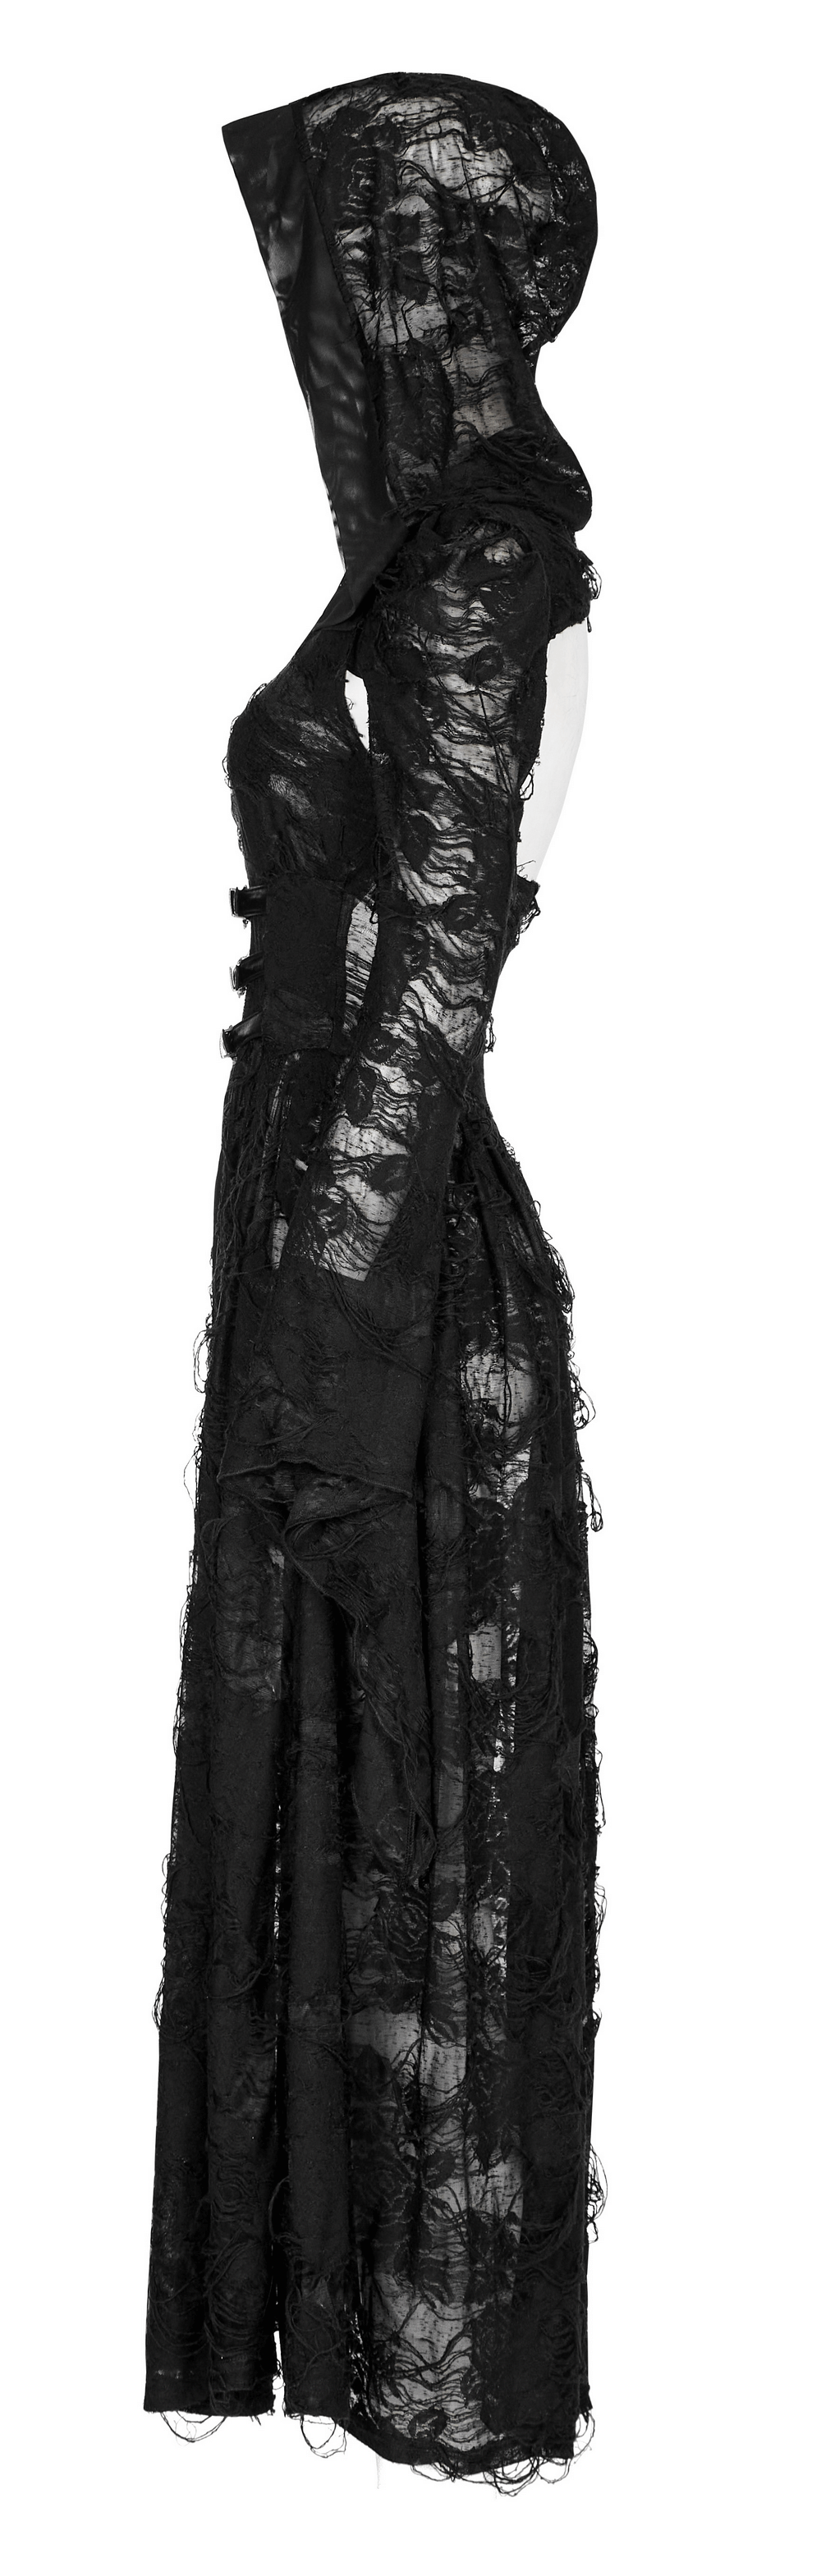 Elegant Long Hooded Lace Gothic Coat for Women - HARD'N'HEAVY